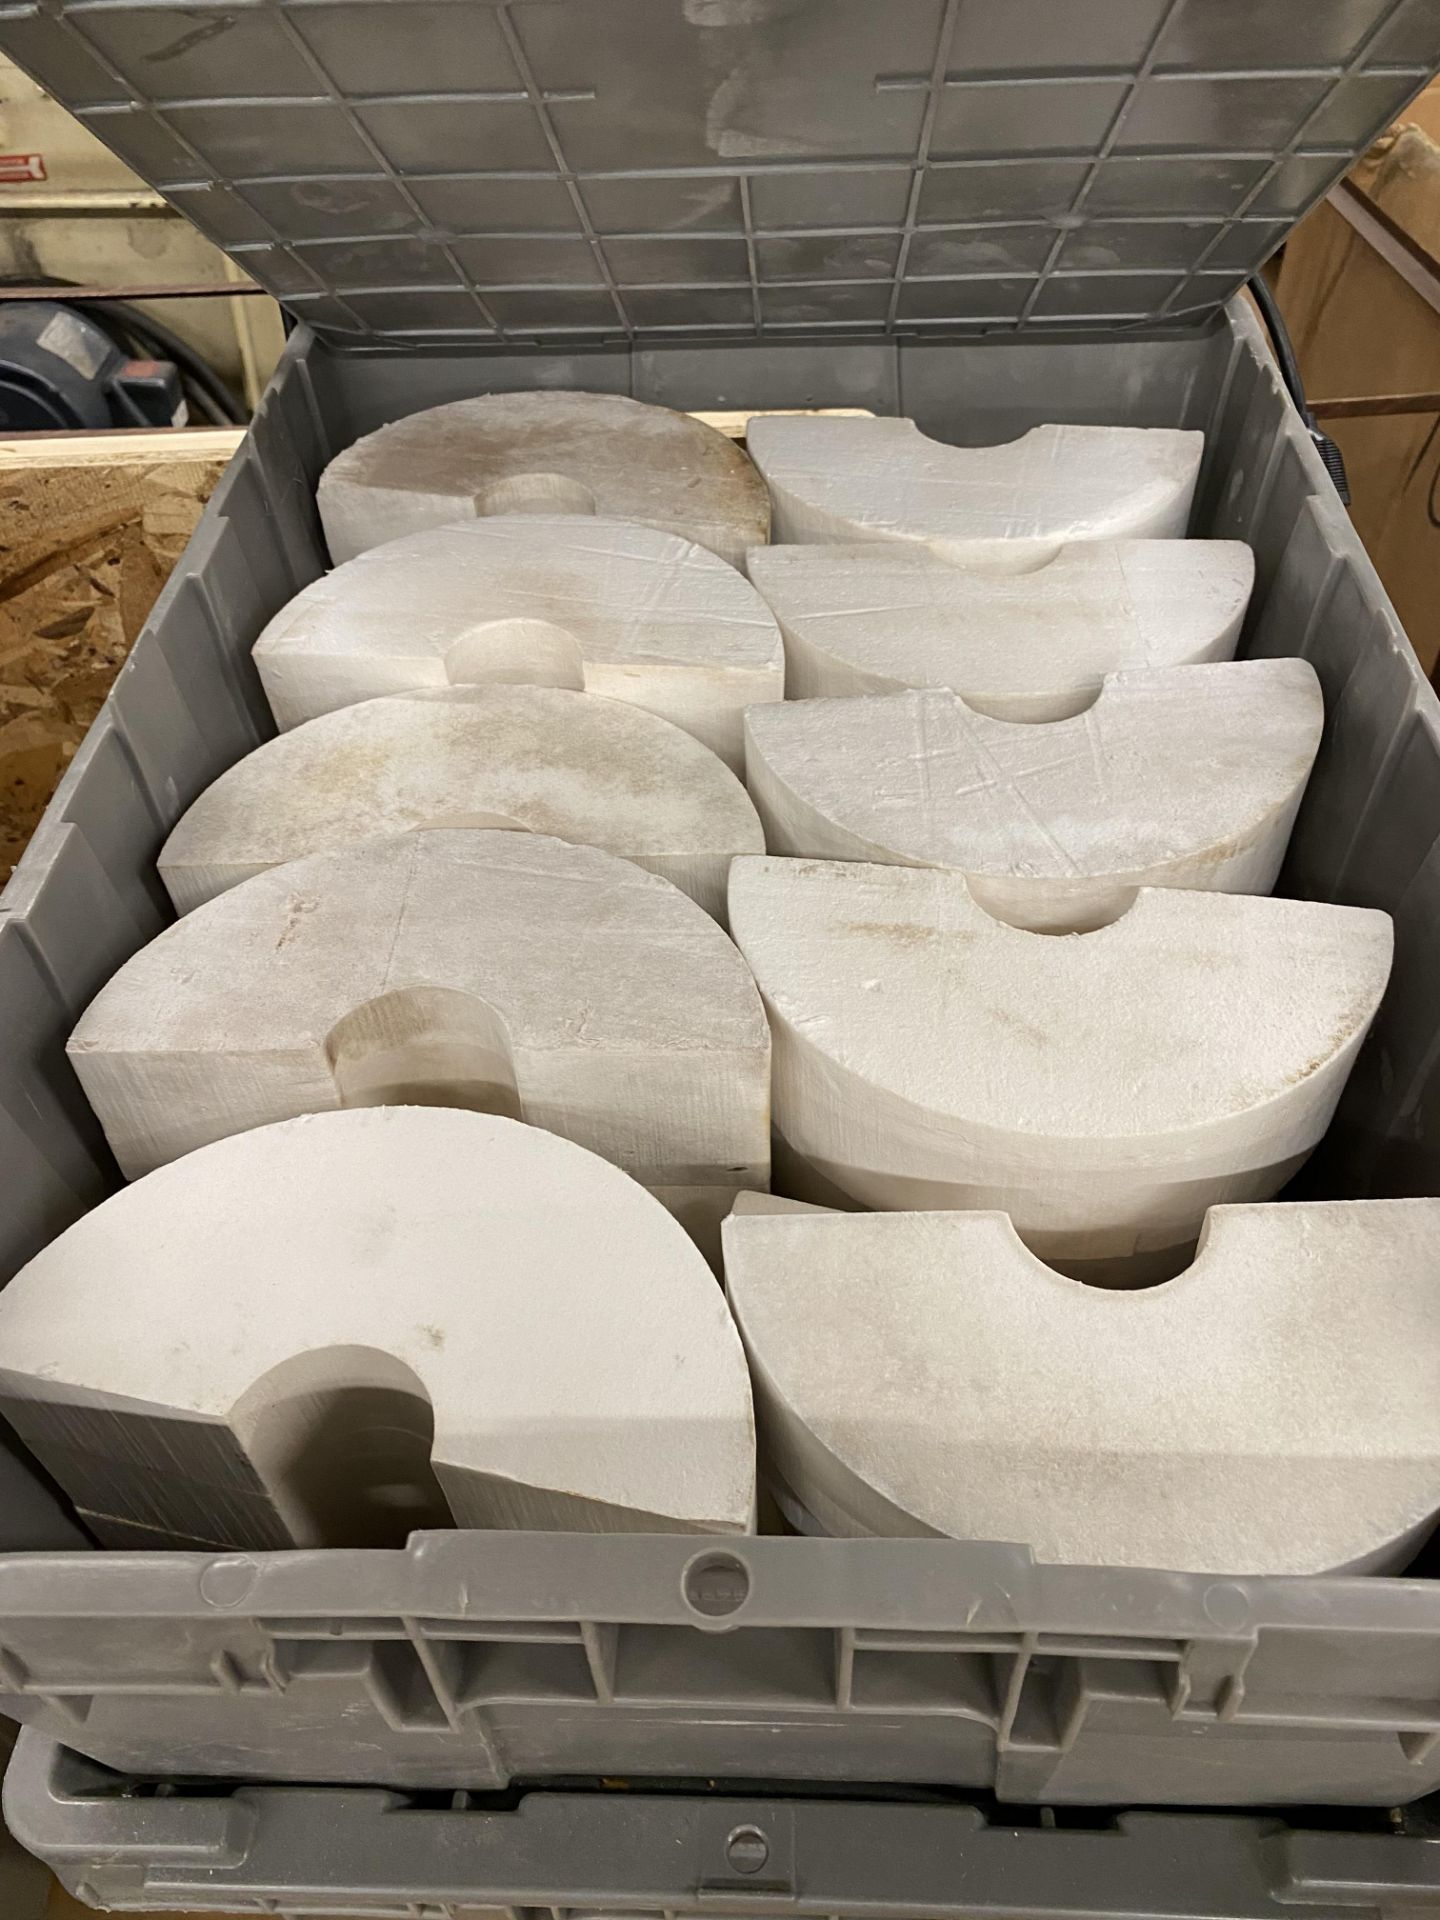 {LOT} Ceramic Accessories in 2 Heavy Duty Plastic Totes w/Totes